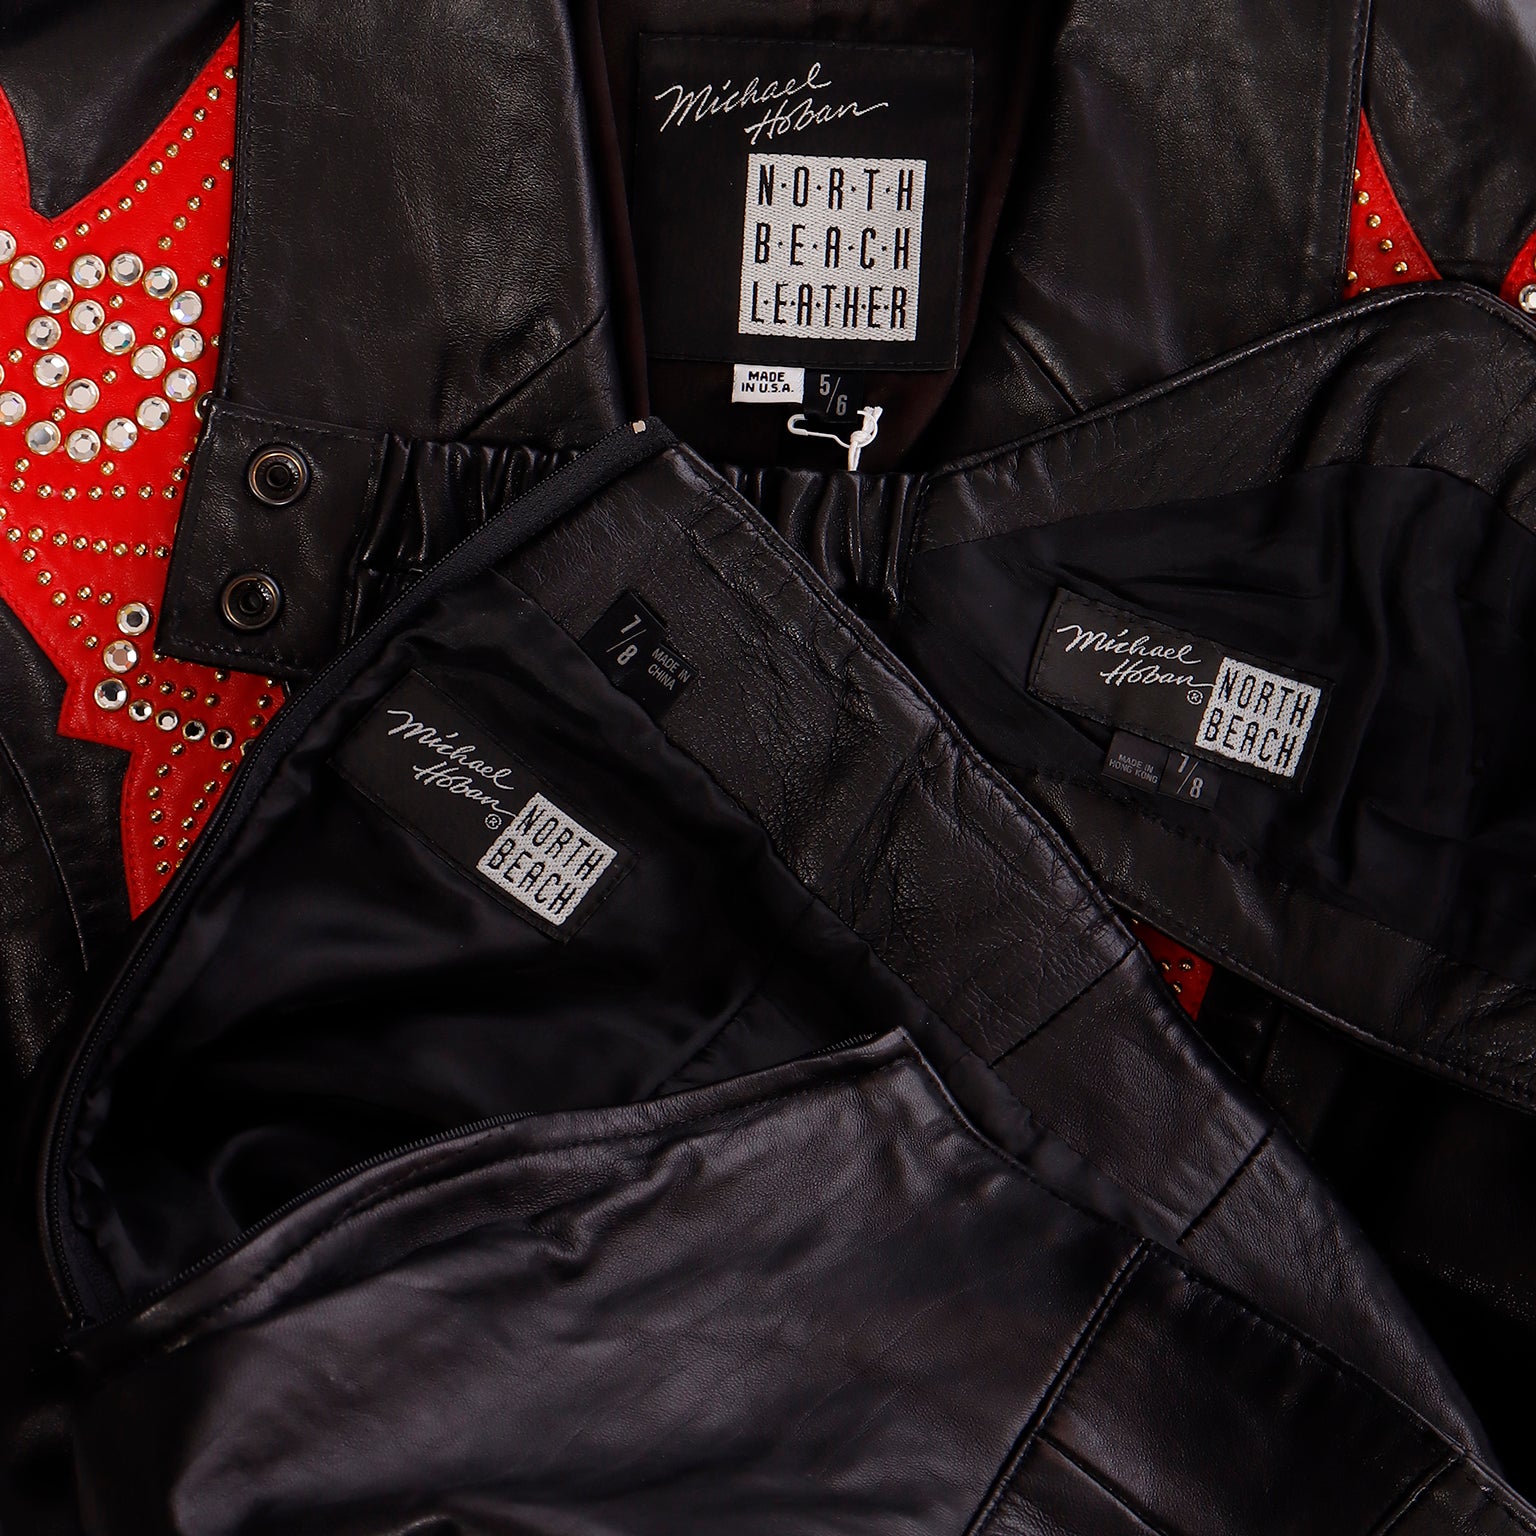 Lv Leather Jacket - RockStar Jacket